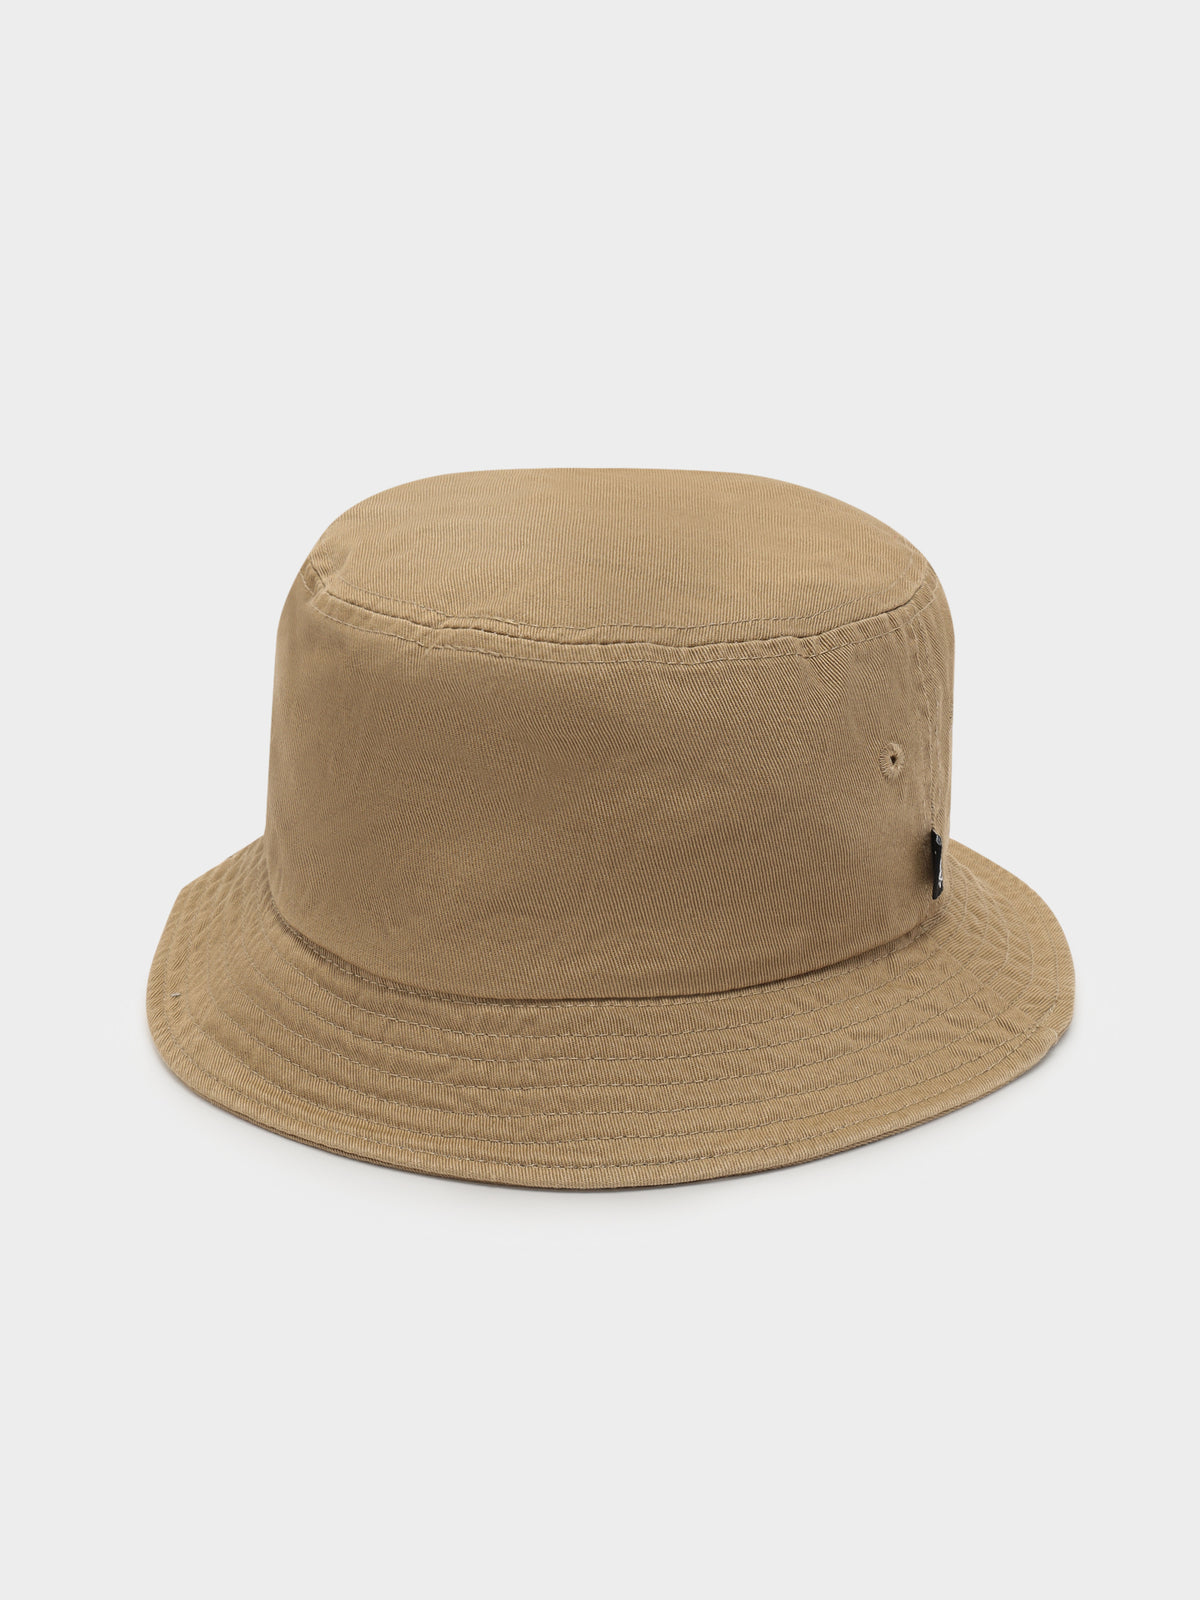 Stock Bucket Hat in Tan